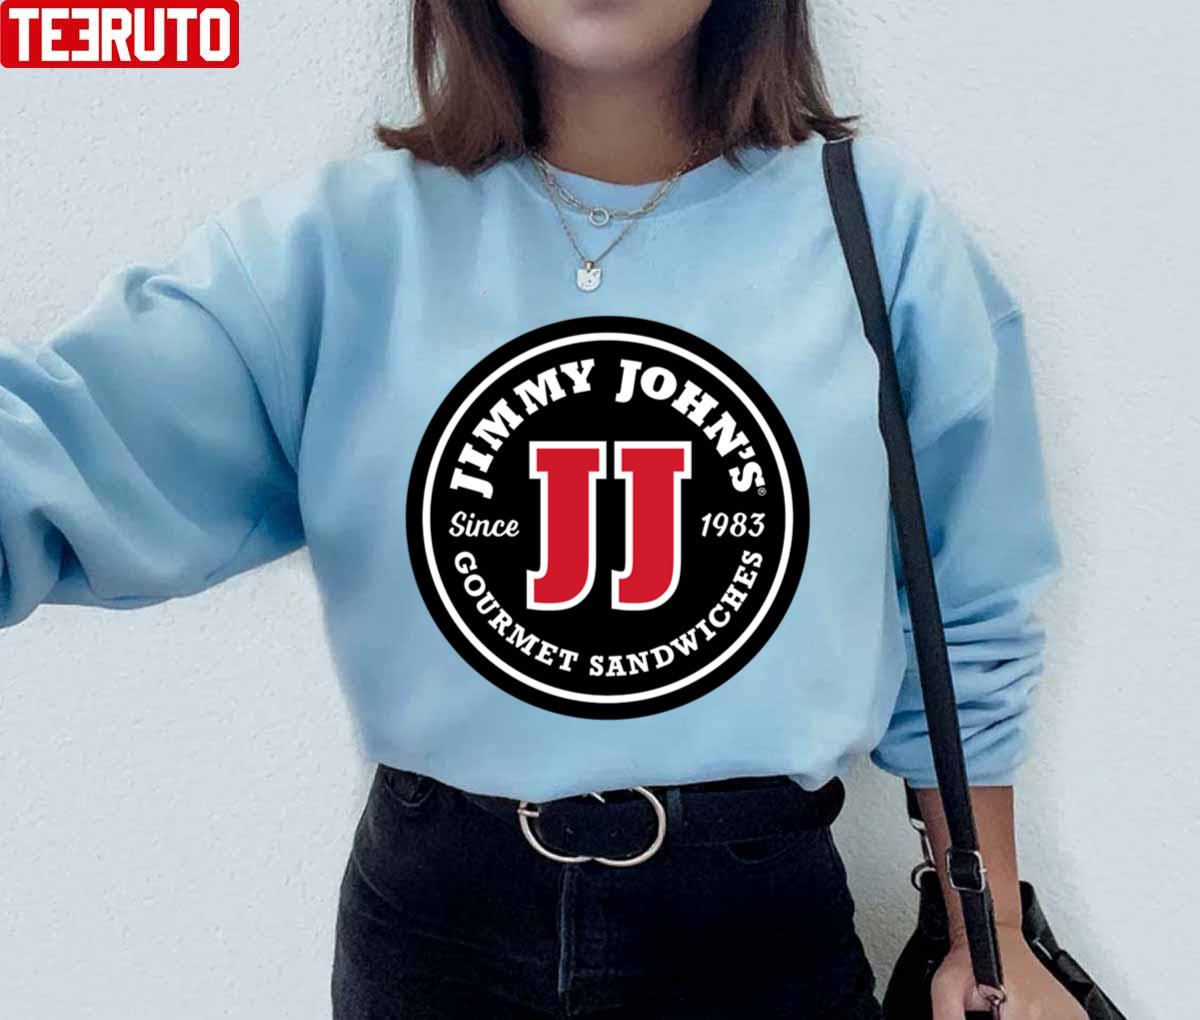 Courmet Sandwiches Jimmy John’s Unisex Sweatshirt